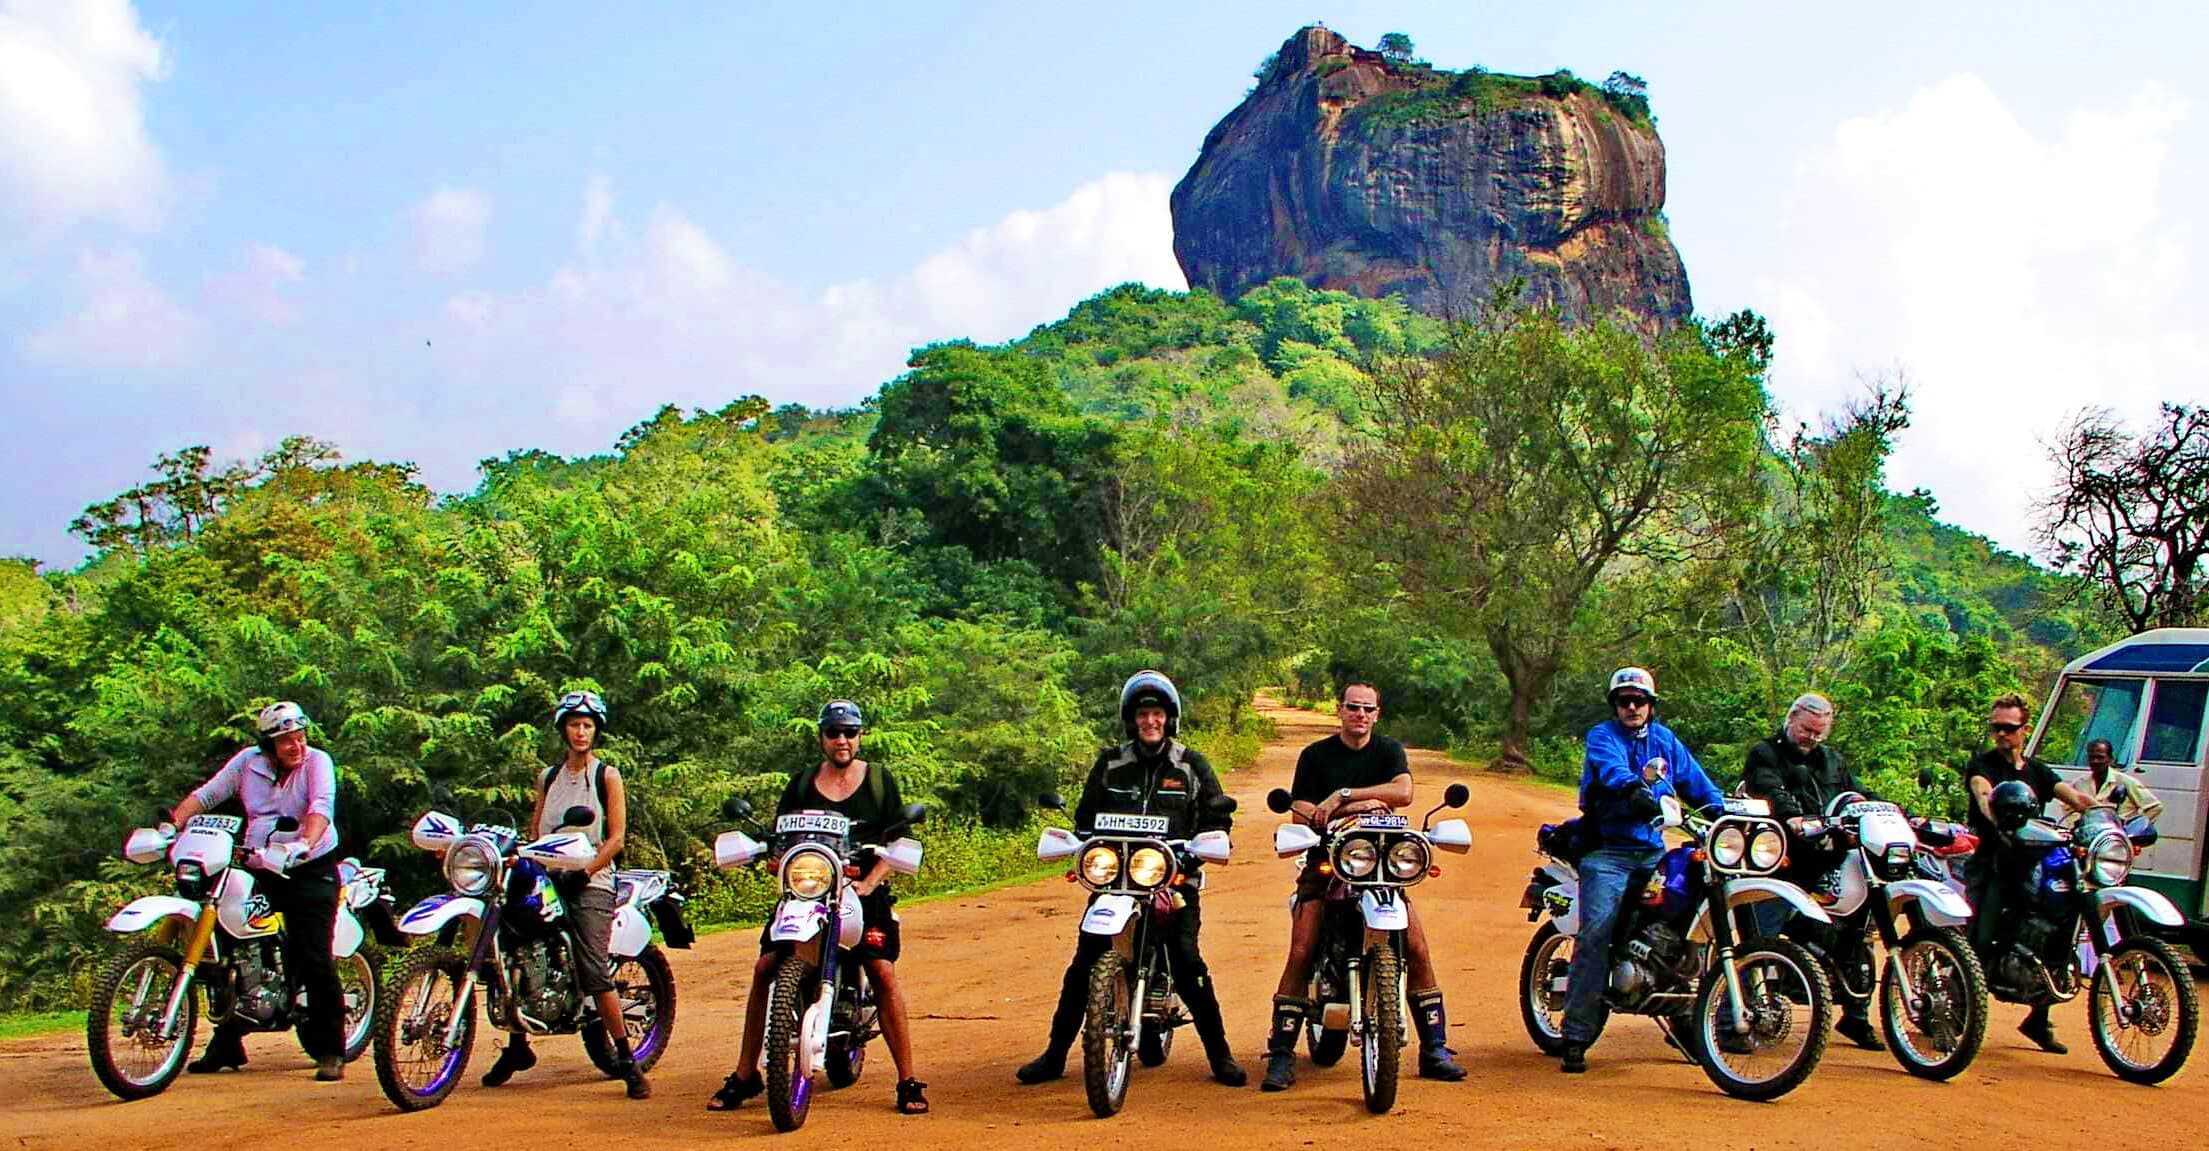 A group of bikers near the Lion's Rock during a motorcycle tour, Sigiriya, Sri Lanka.